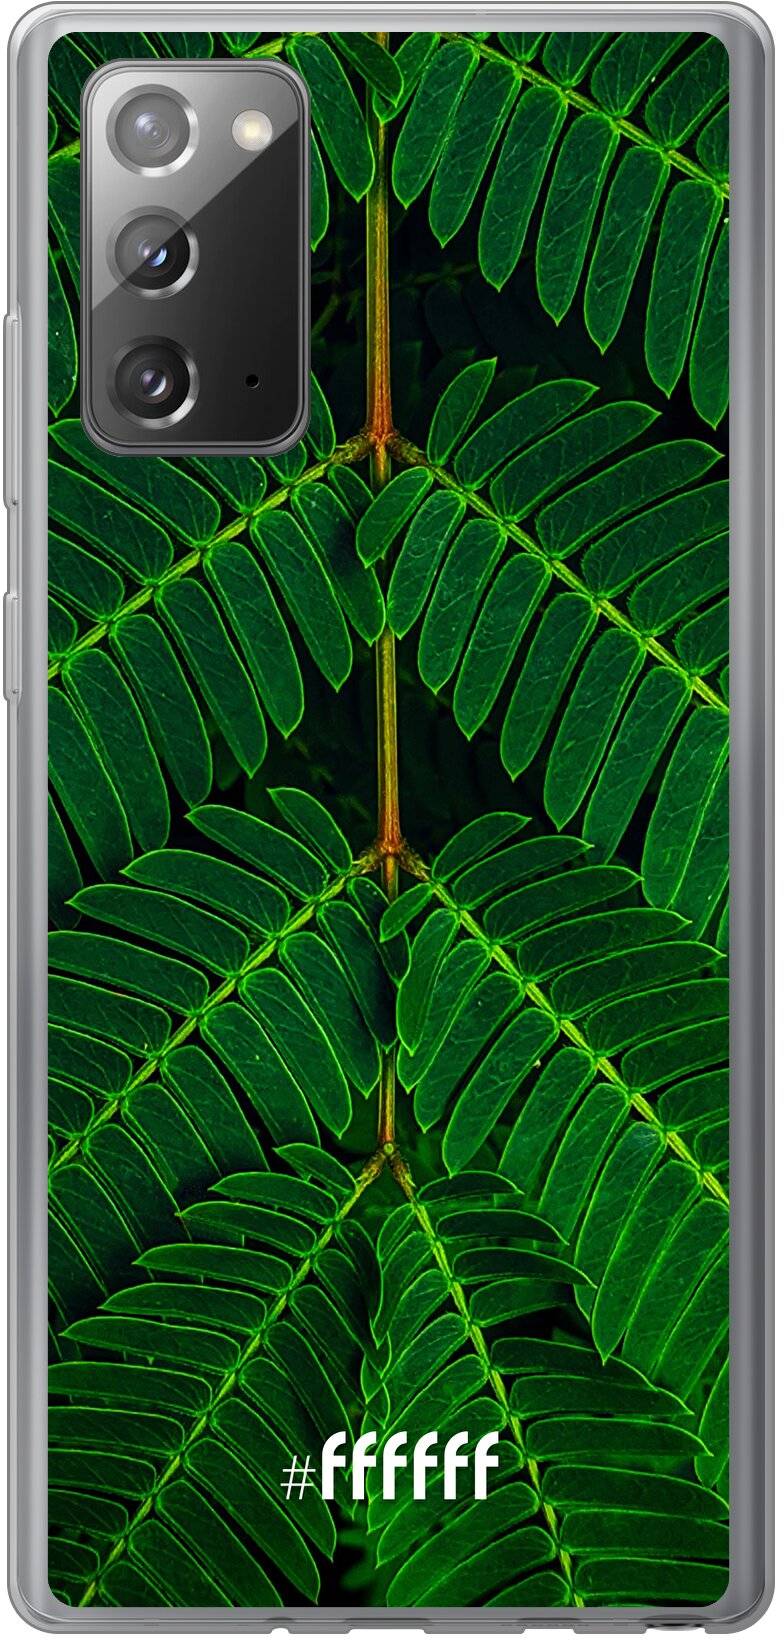 Symmetric Plants Galaxy Note 20